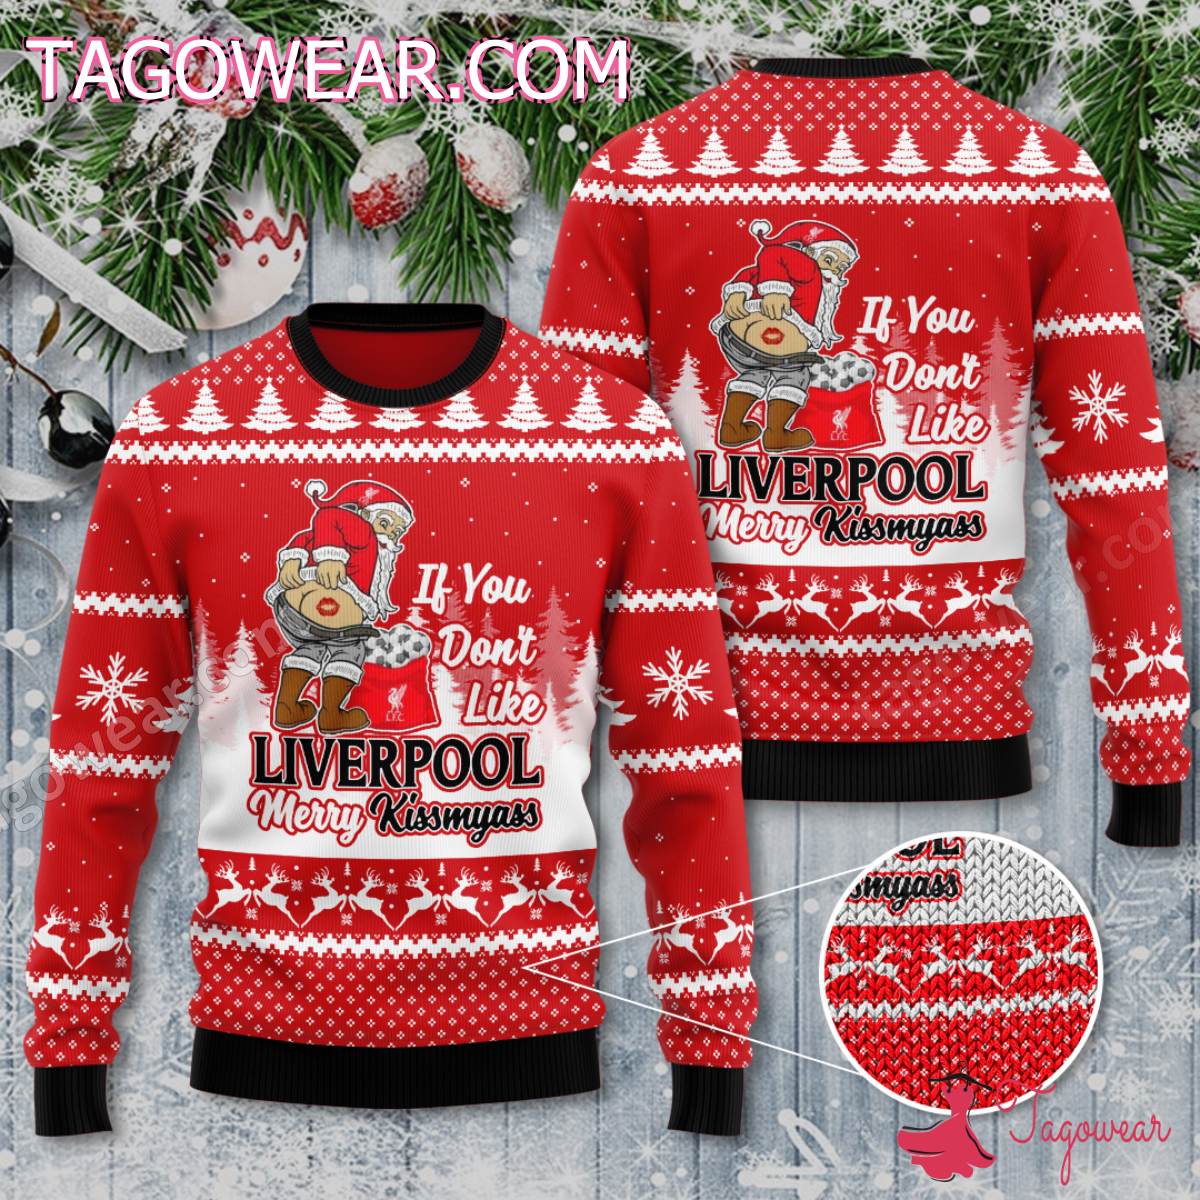 If You Don't Like Liverpool Merry Kissmyass Ugly Christmas Sweater